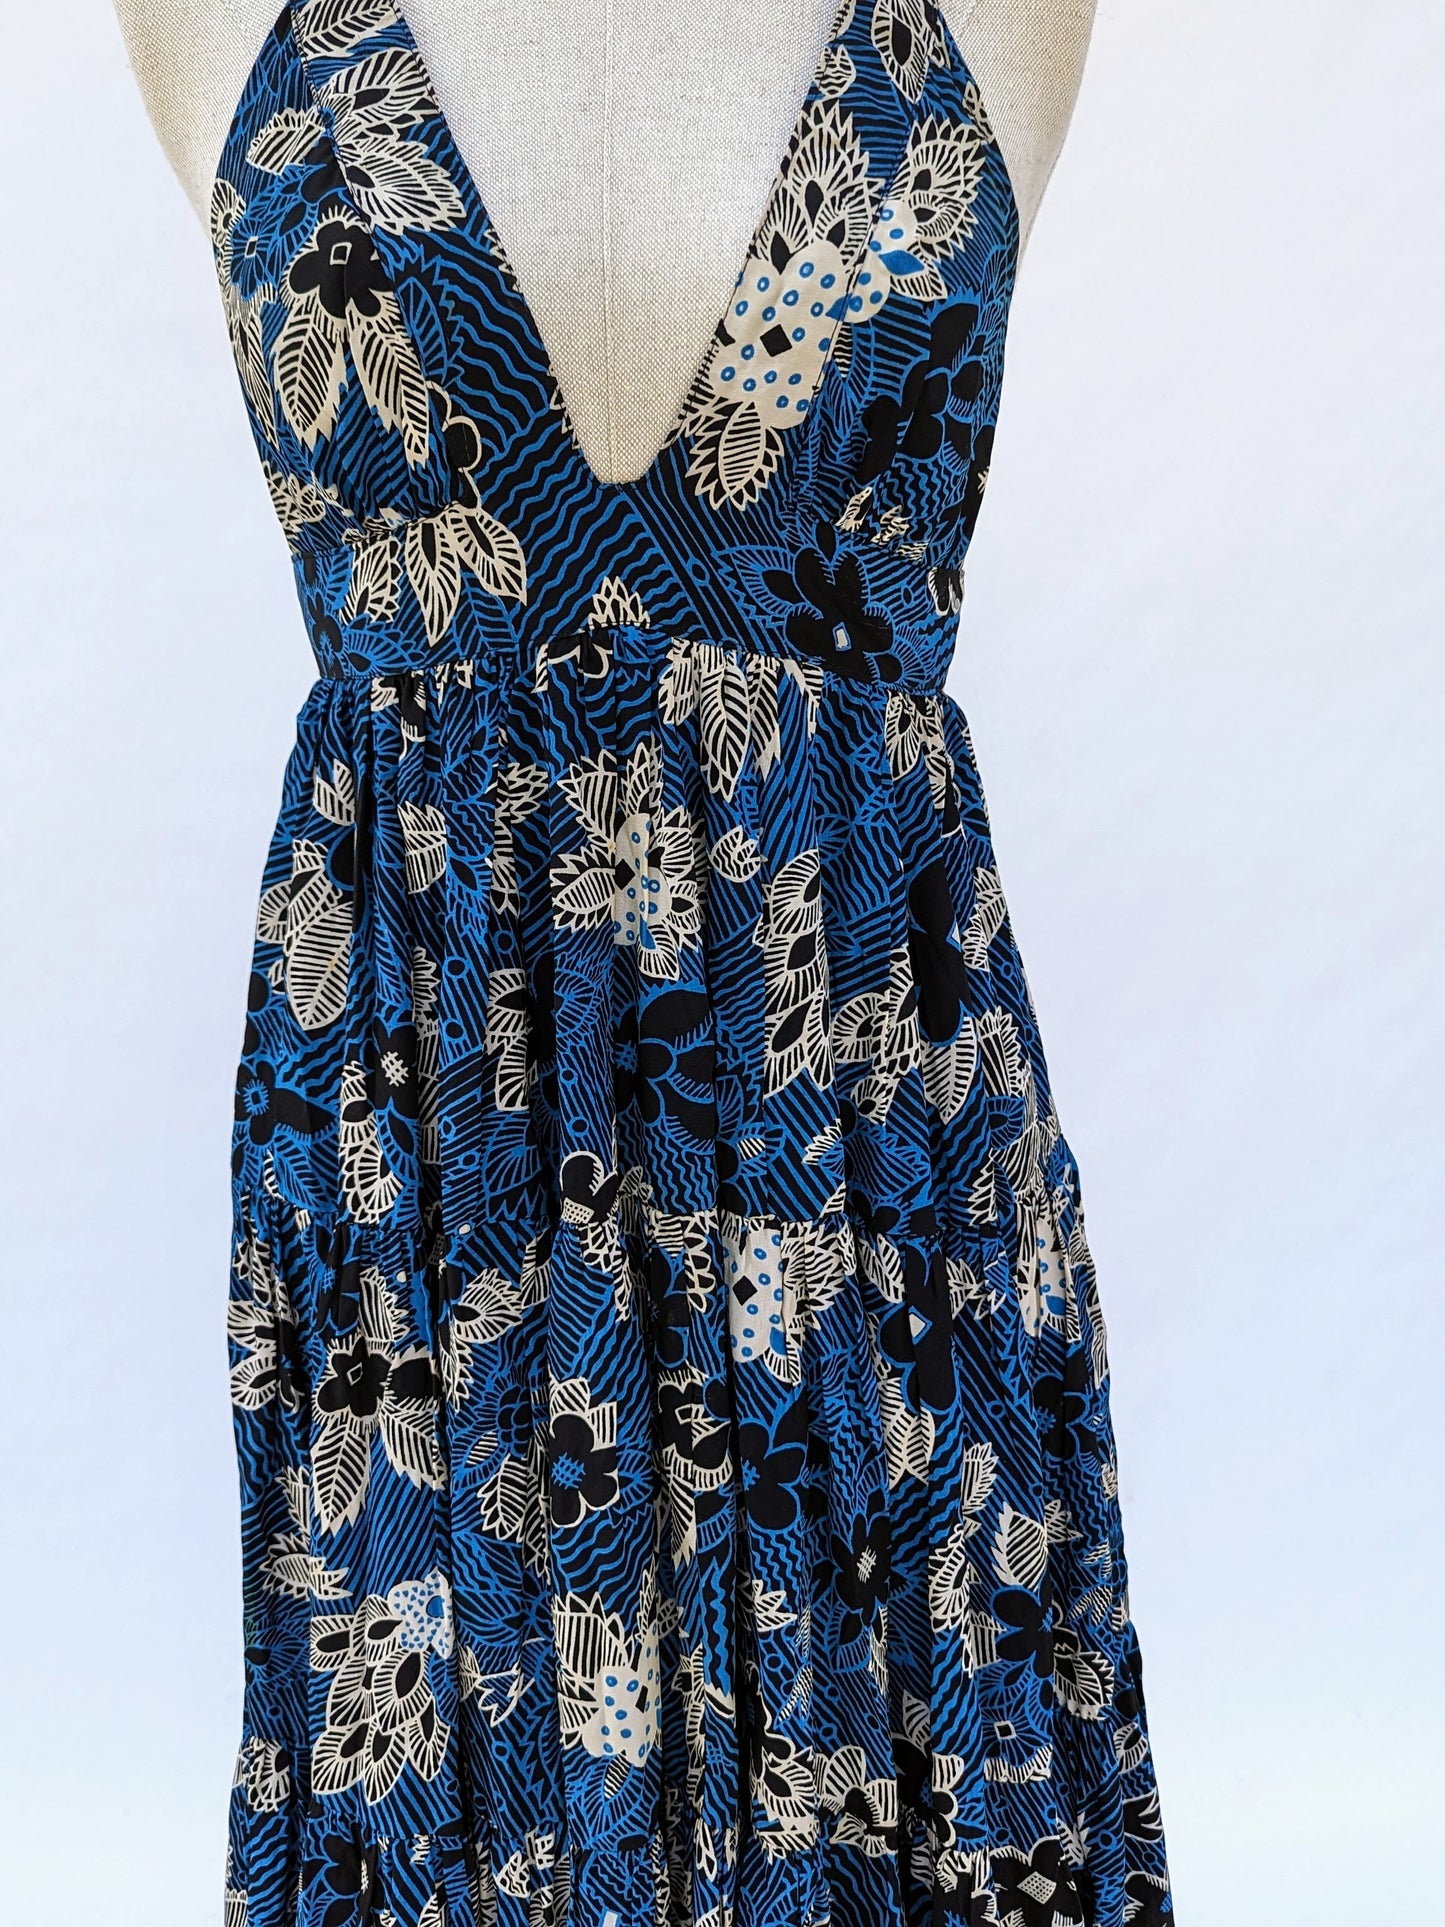 Rare 70s Ossie Clark for Radley, Celia Birtwell Print Summer Dress